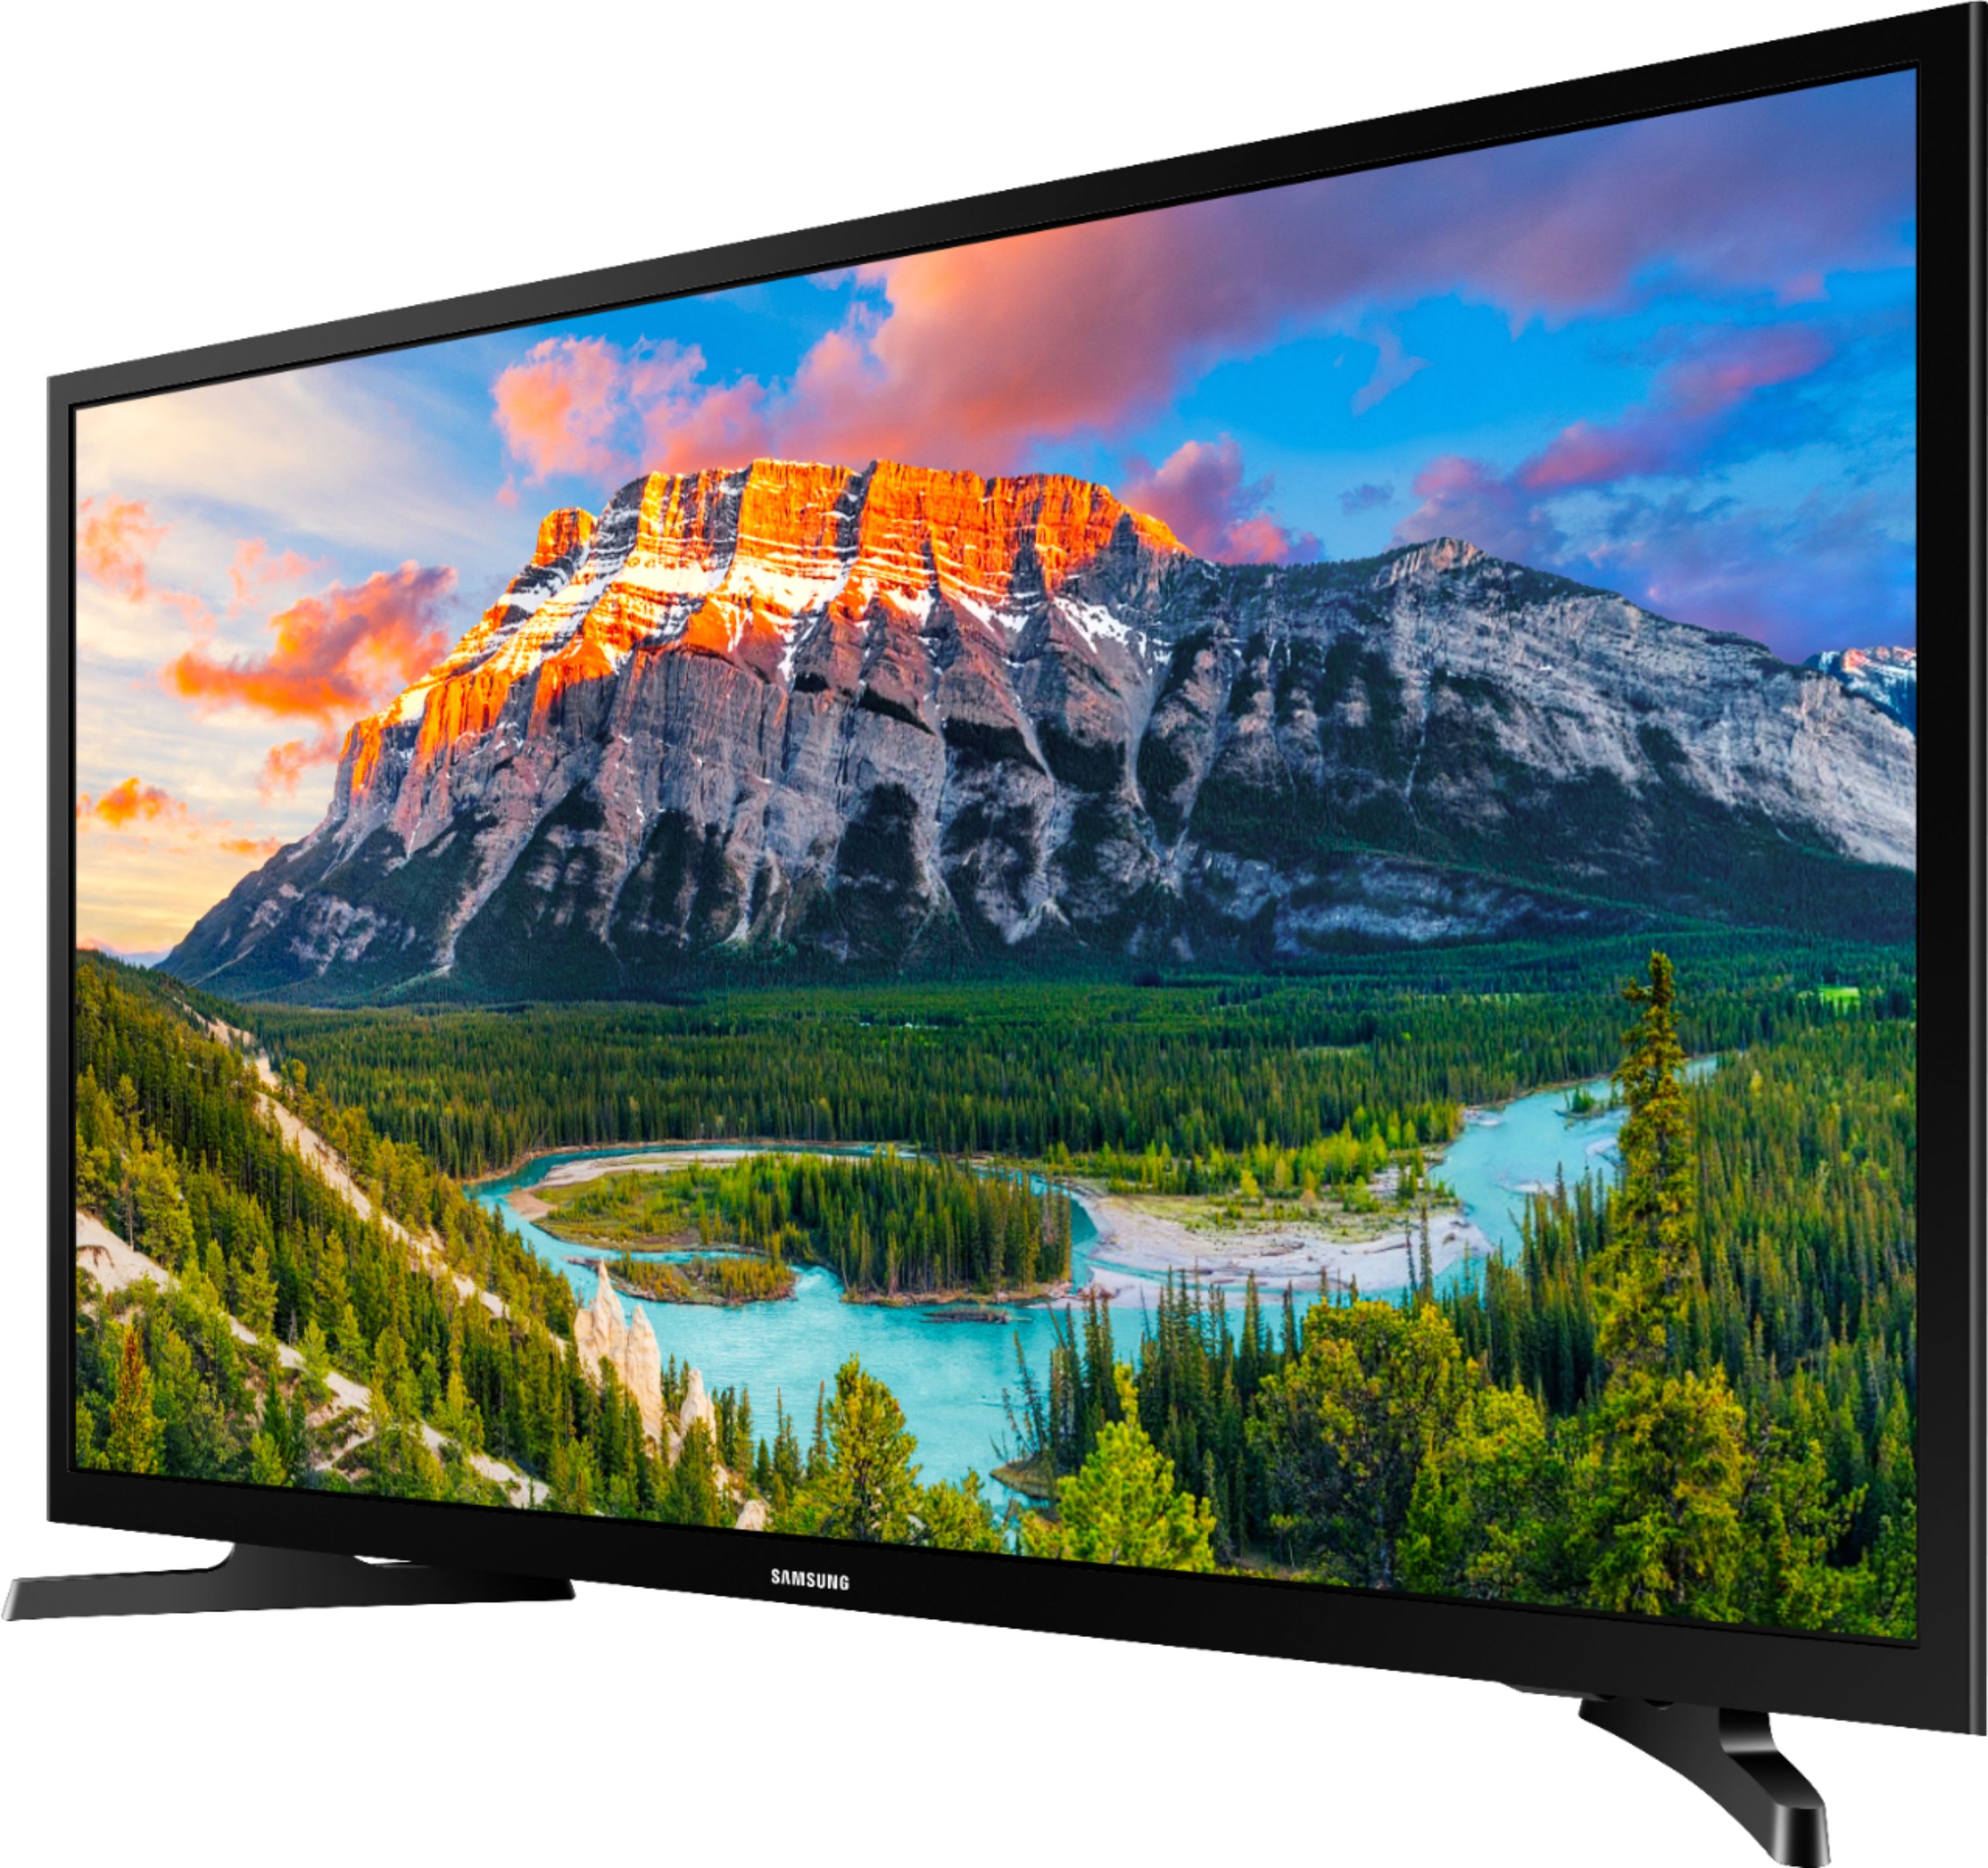 Left View: Samsung - 32" Class N5300 Series LED Full HD Smart Tizen TV